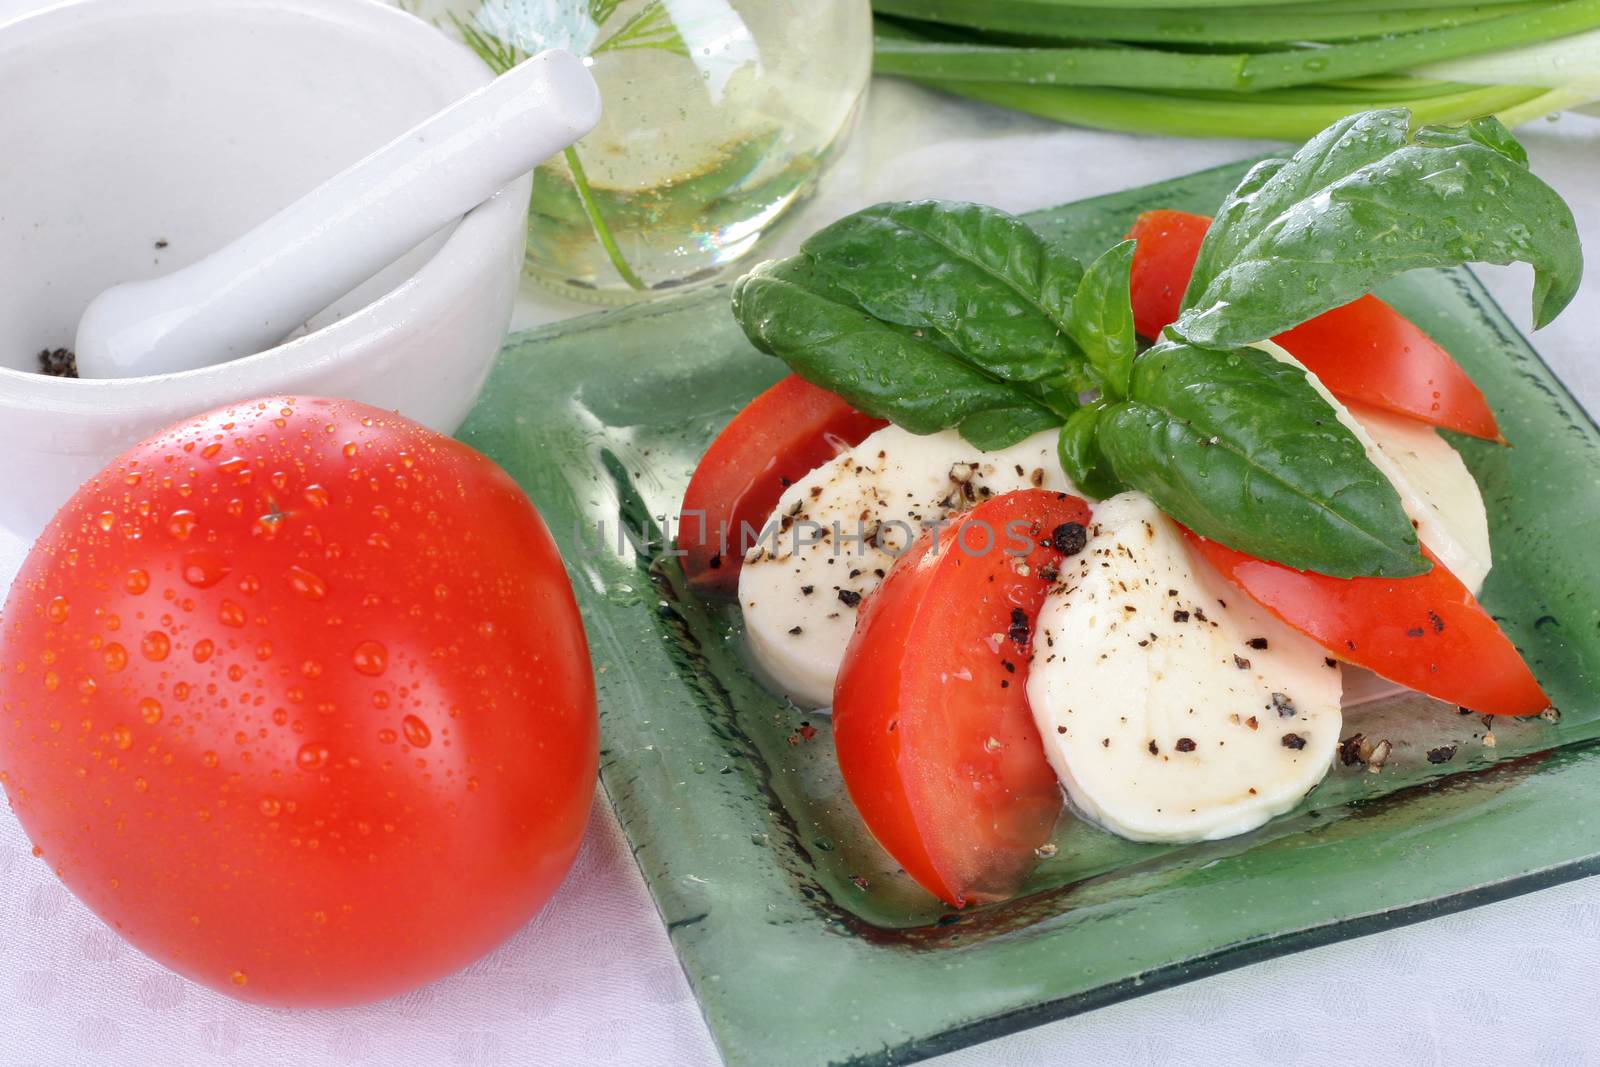 Tomatoes with mozzarella. by robert_przybysz